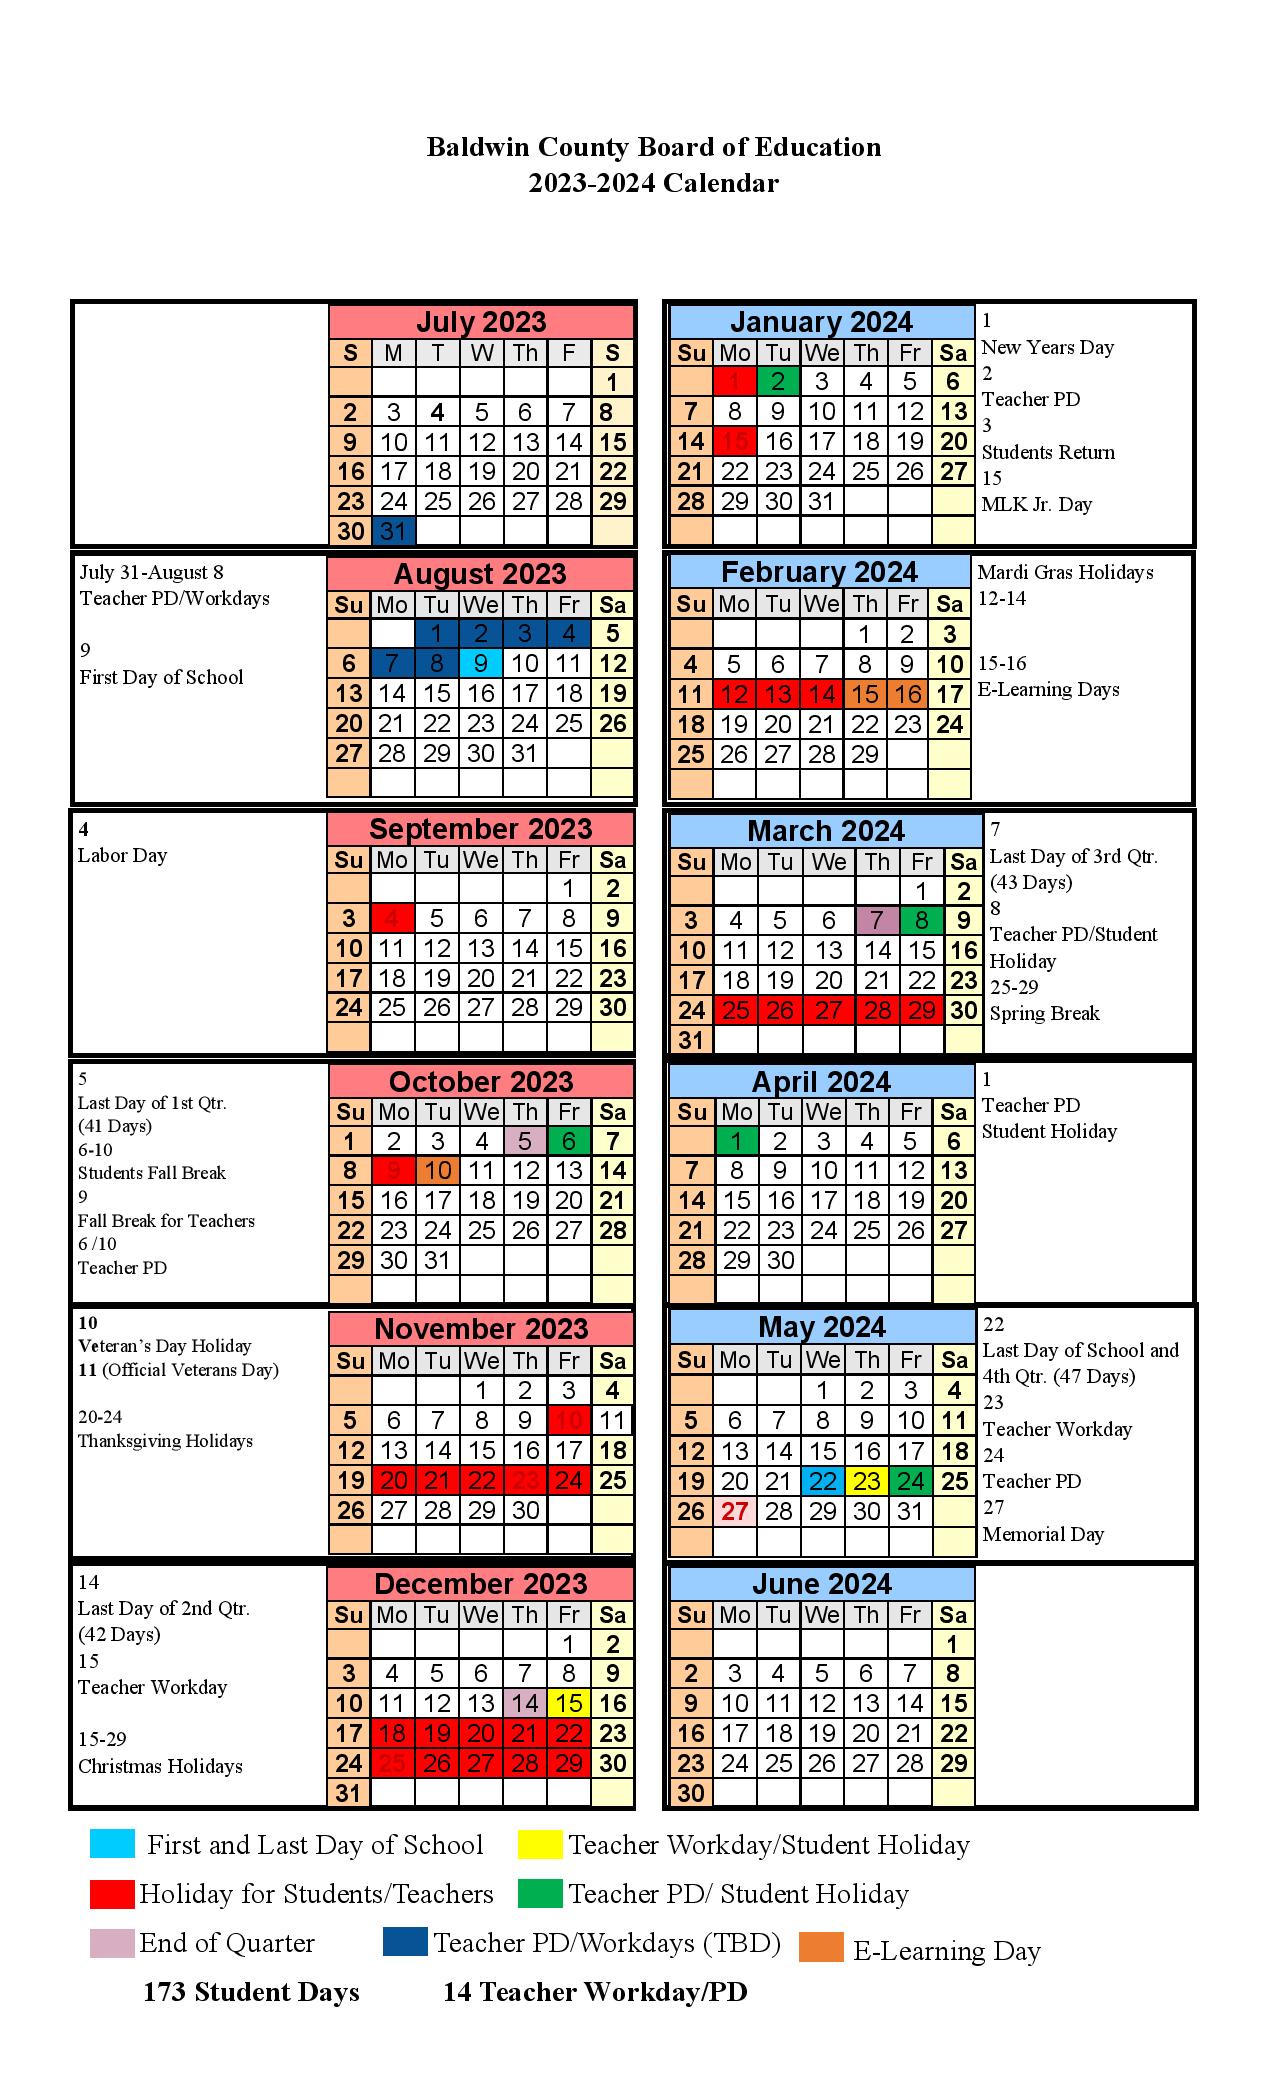 baldwin-county-public-schools-calendar-2023-2024-in-pdf-school-calendar-info